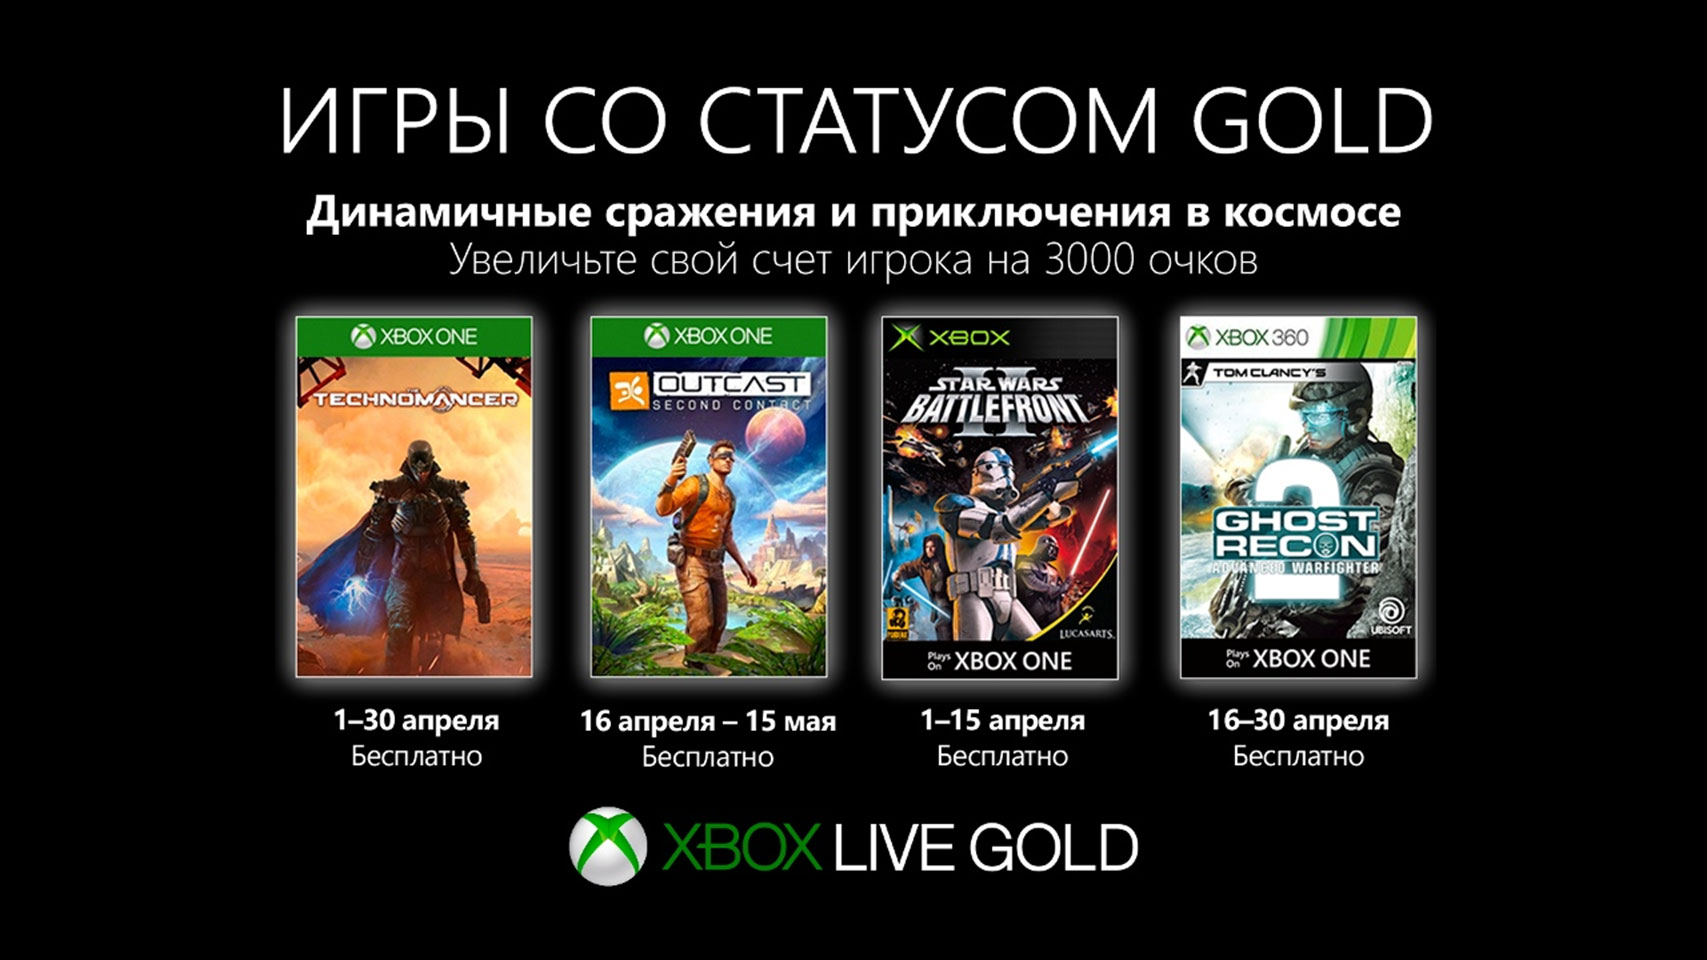 Xbox Live Gold 3 Months (RU) + GIFT ✅